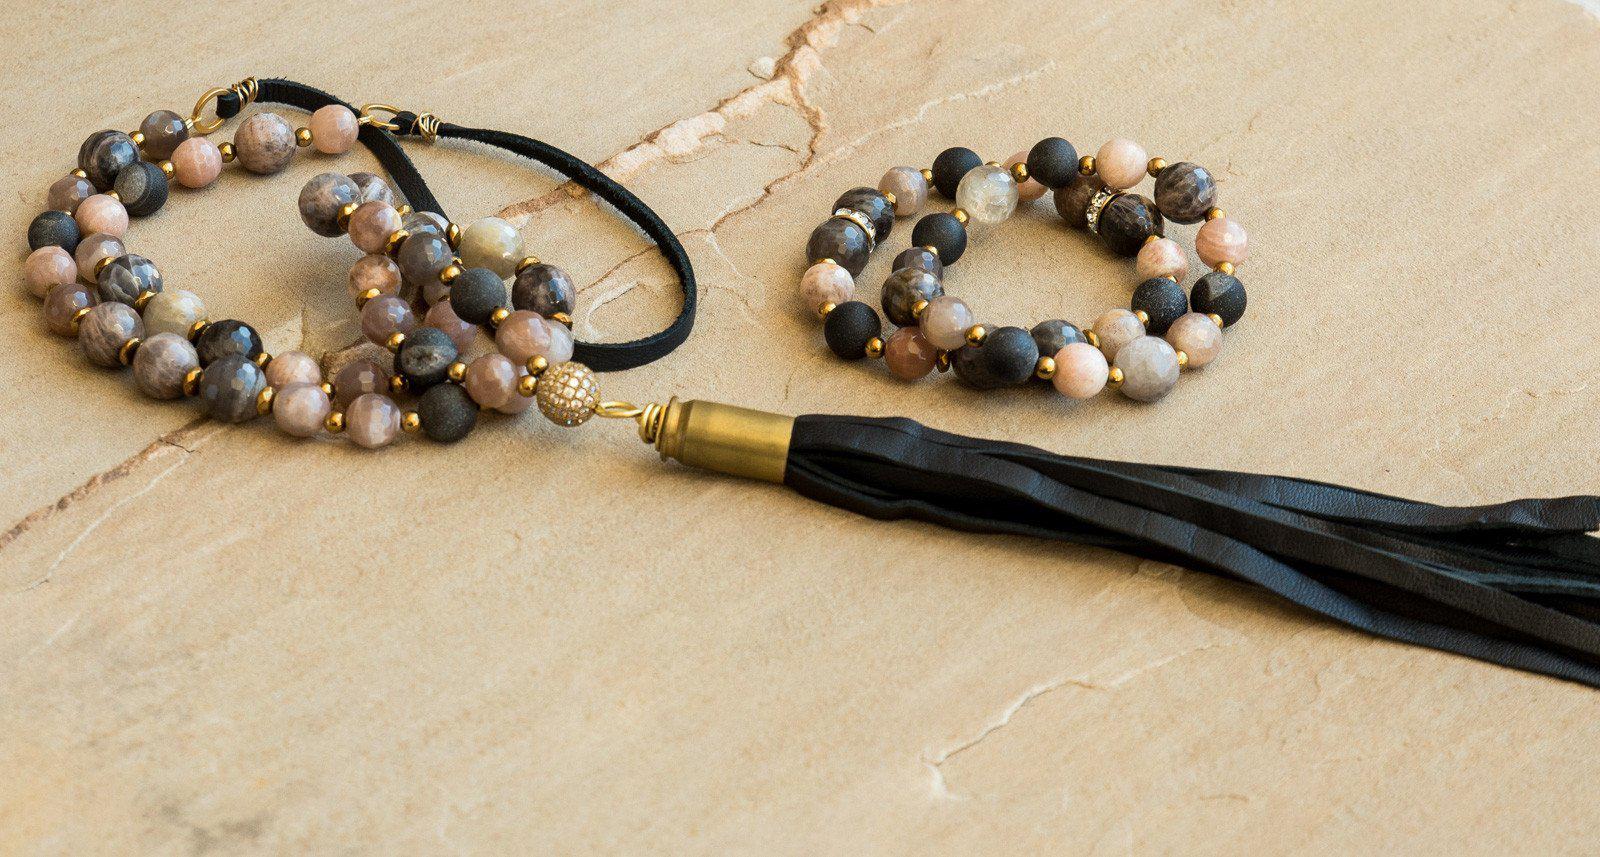 Sandstone Black Tassel Necklace